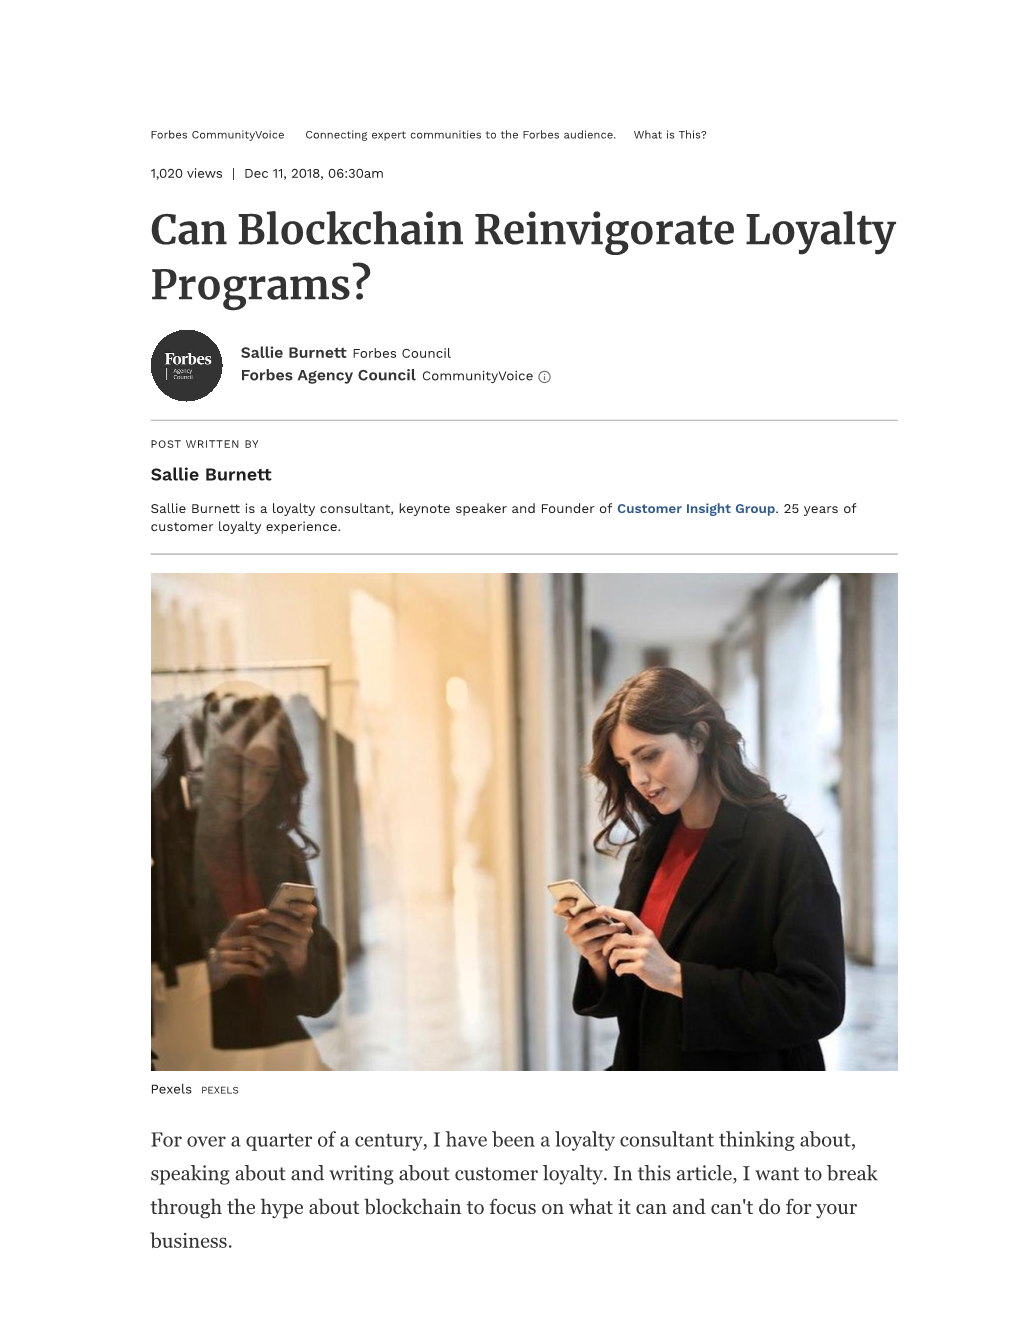 Can Blockchain Reinvigorate Loyalty Programs?